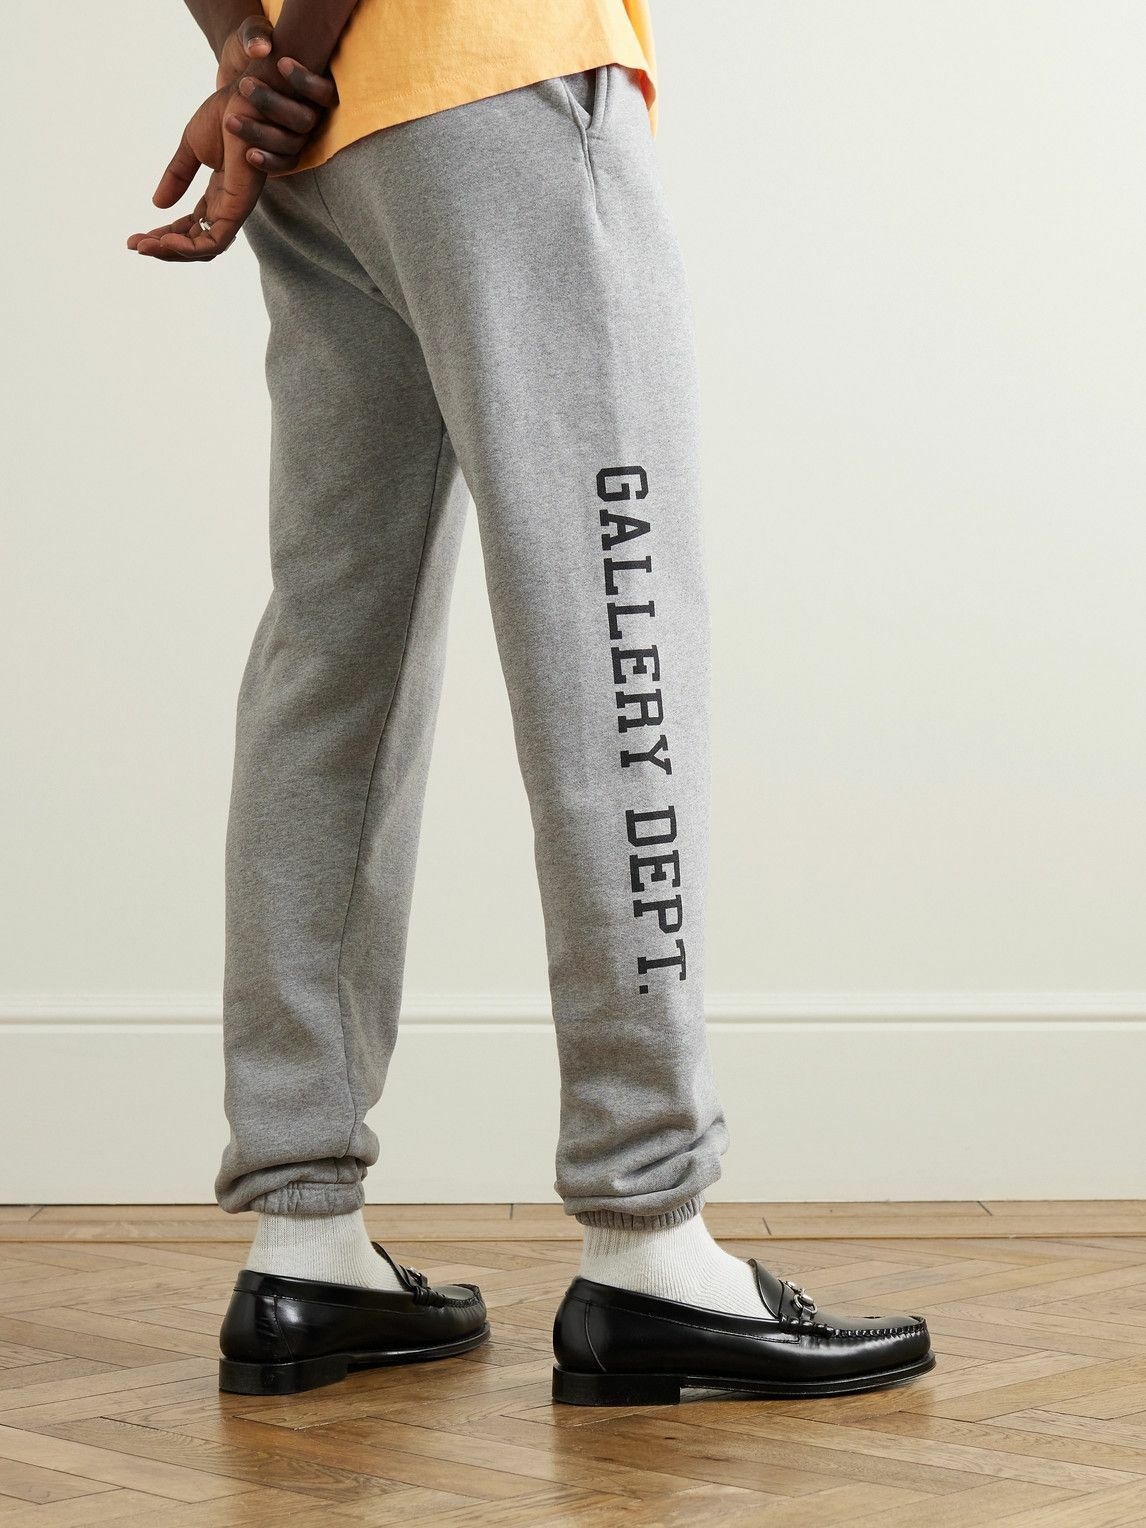 GALLERY DEPT. Tapered Logo-Print Cotton-Jersey Swetpants for Men